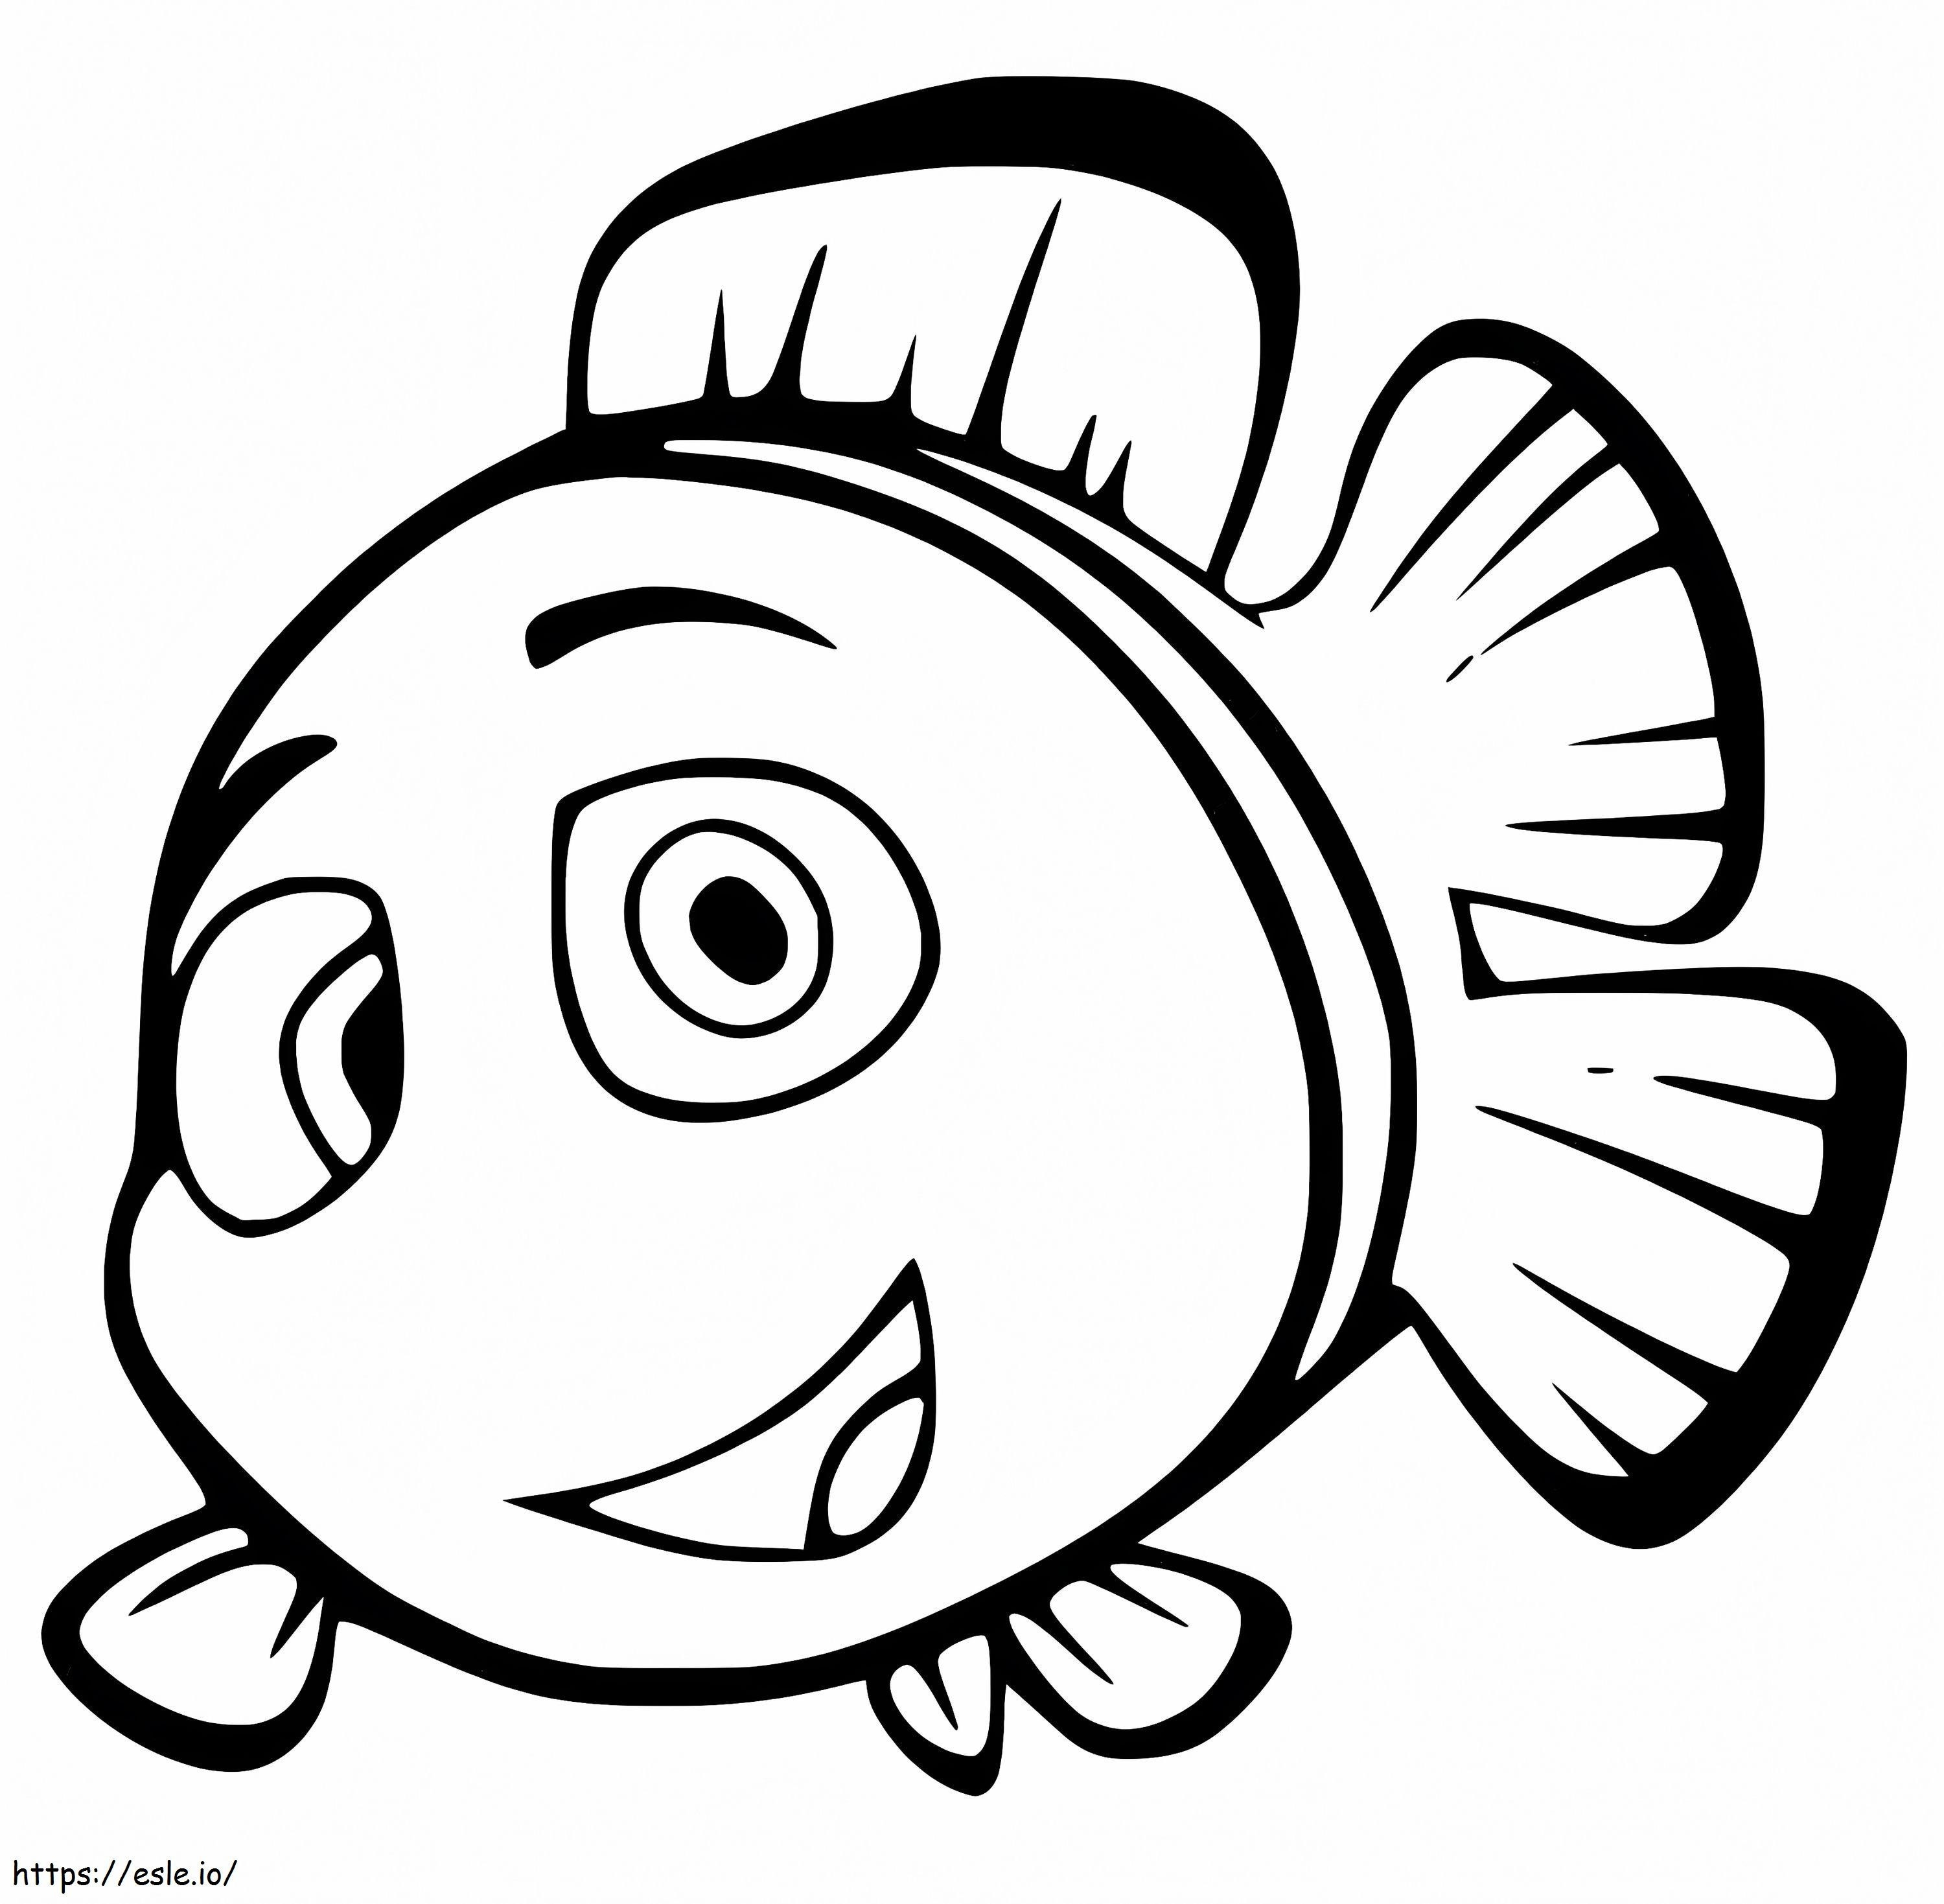 Cartoon Clown Fish coloring page